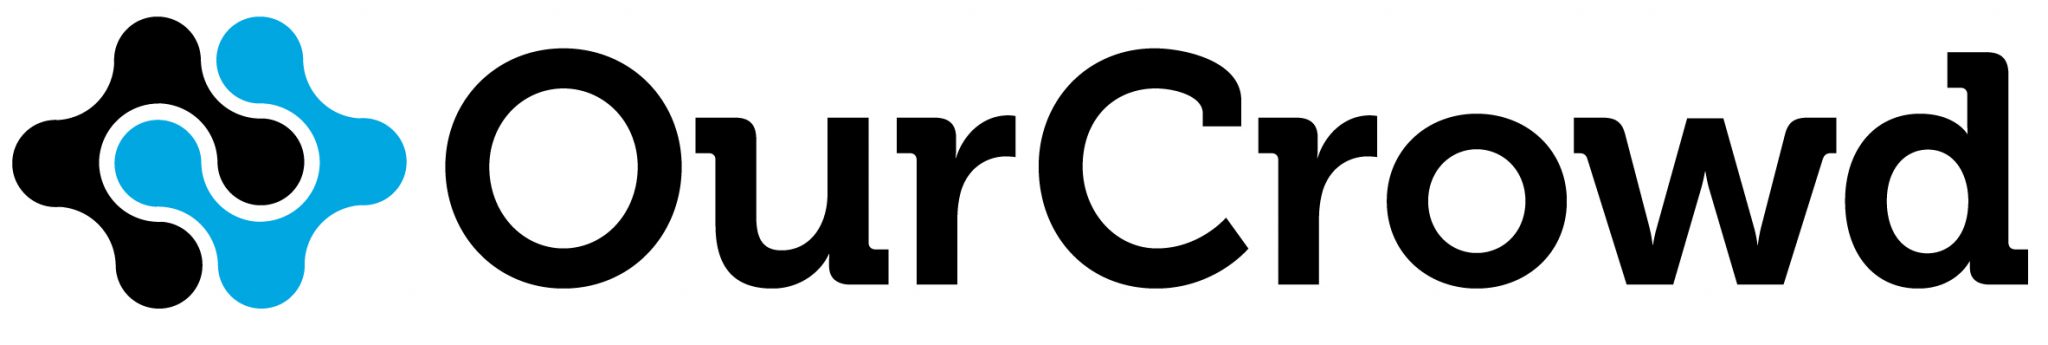 OurCrowd_logo